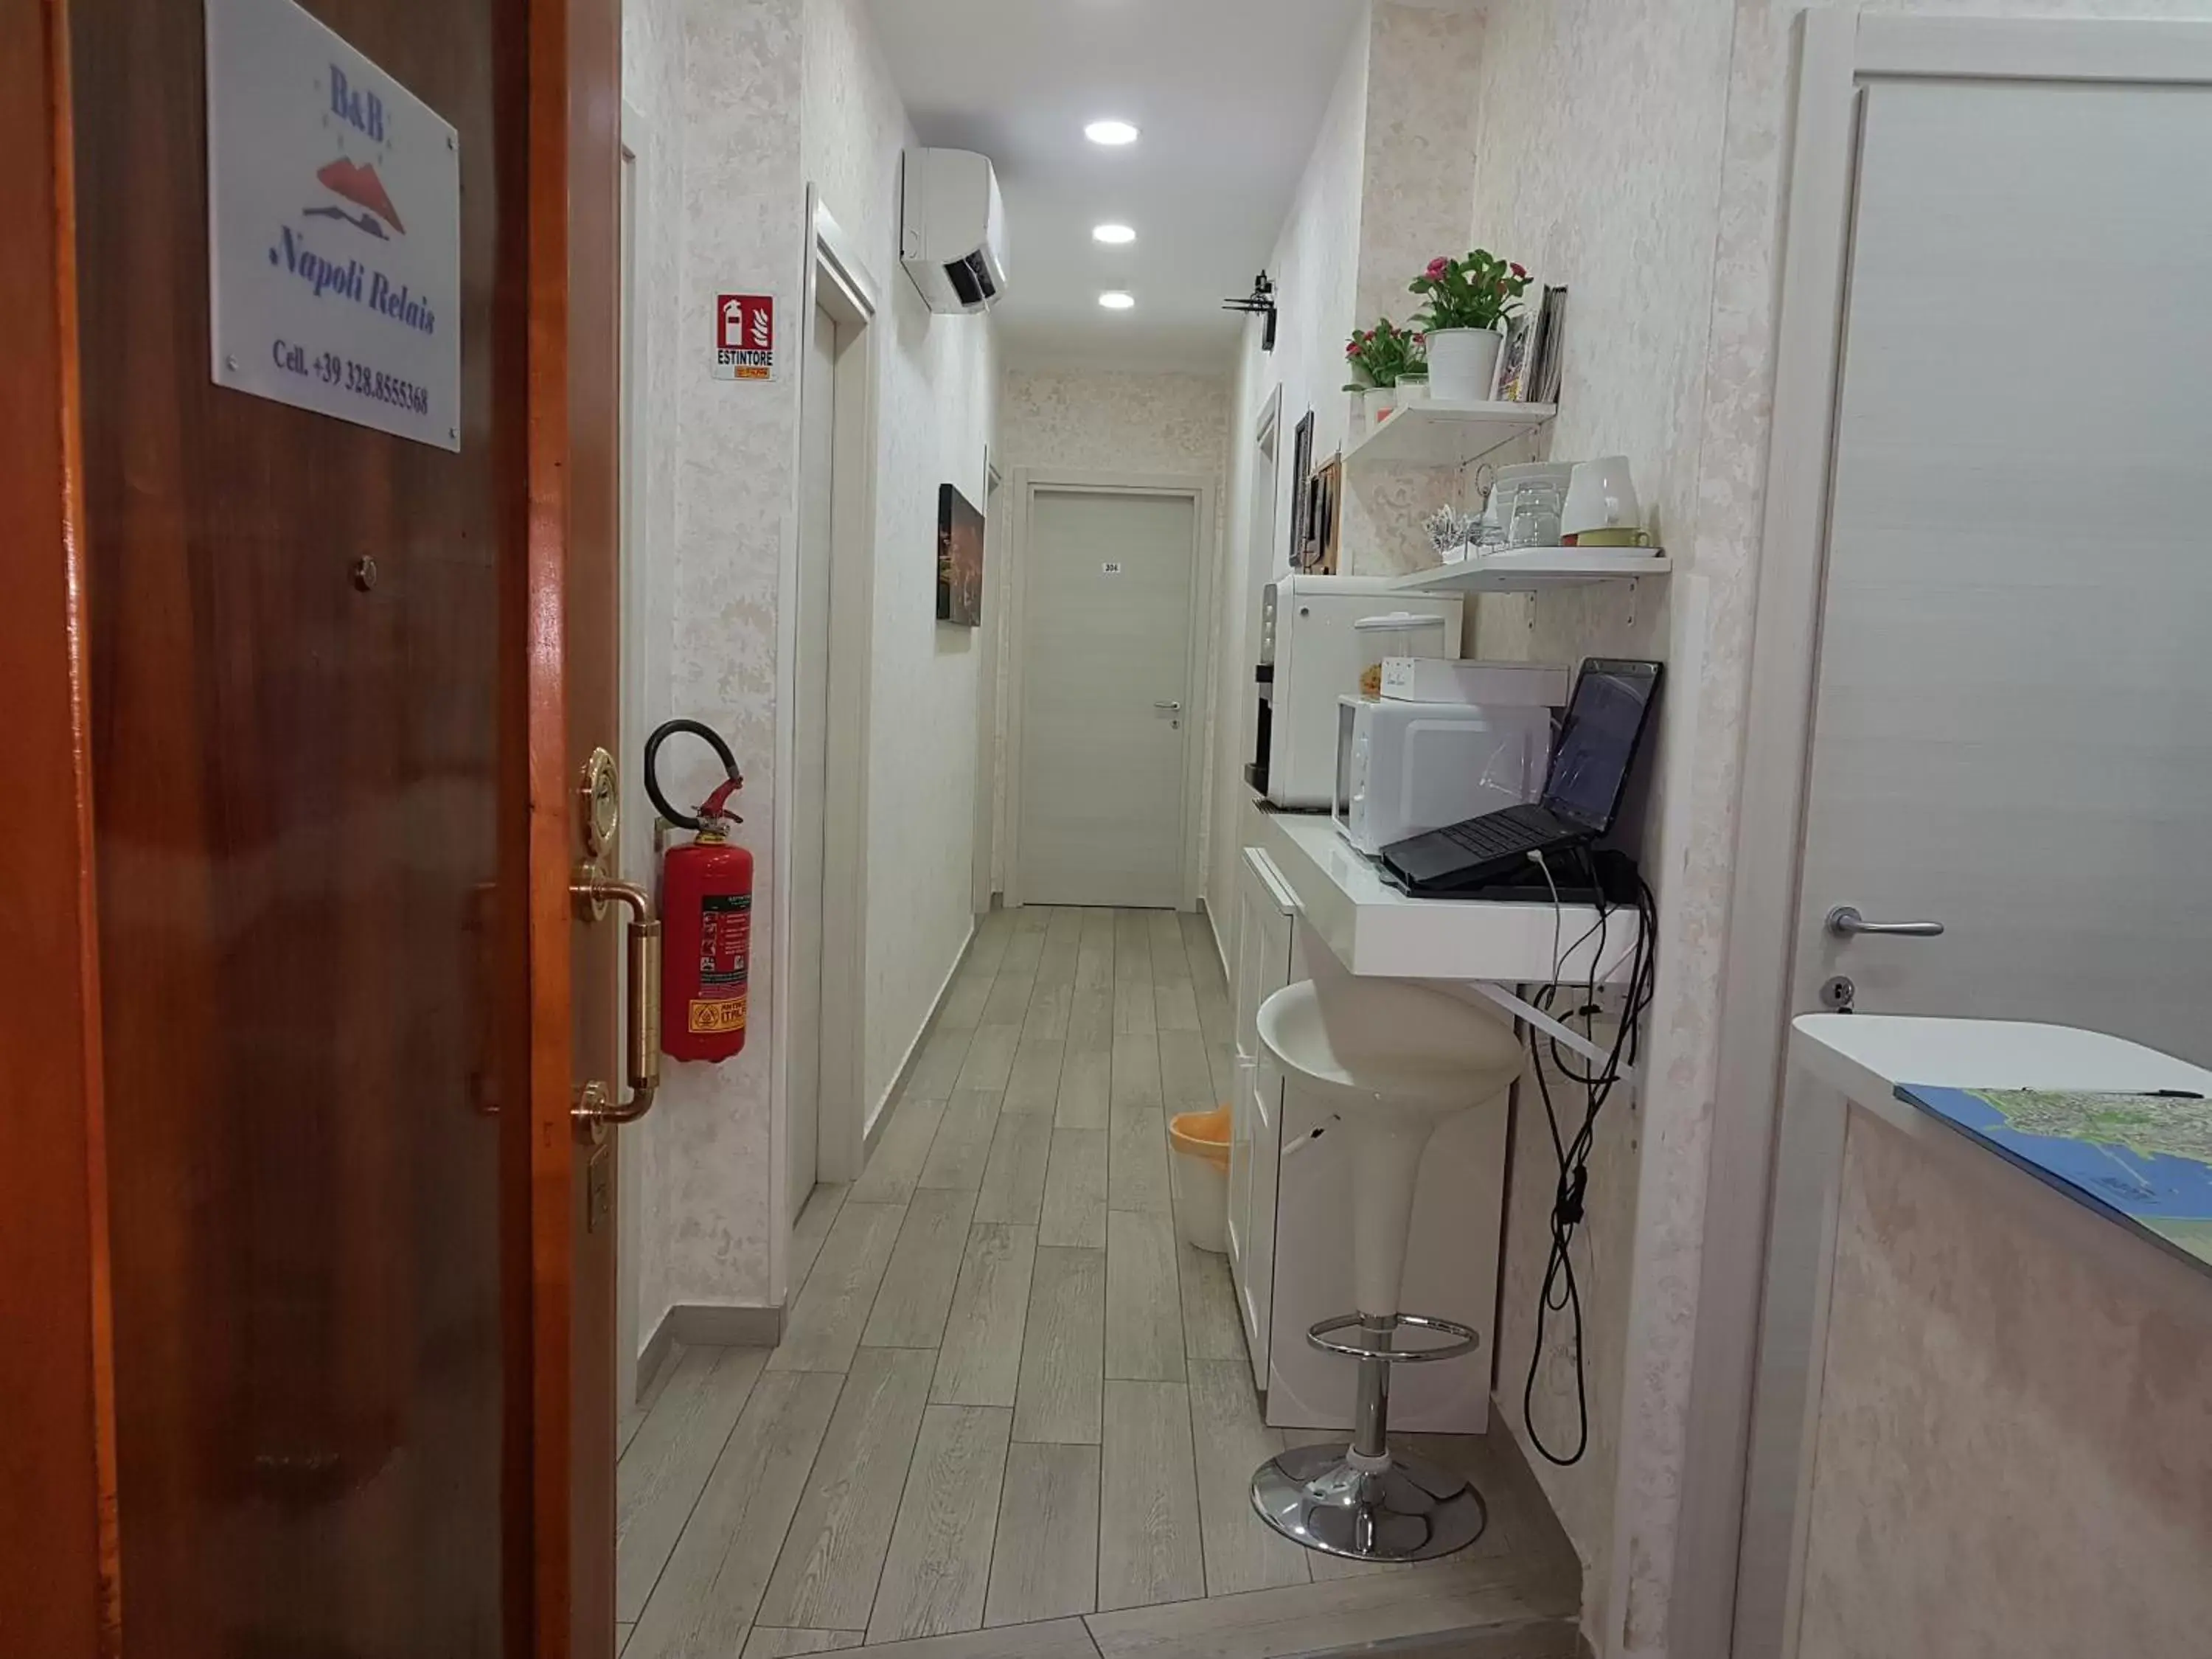 Lobby or reception, Bathroom in Napoli Relais